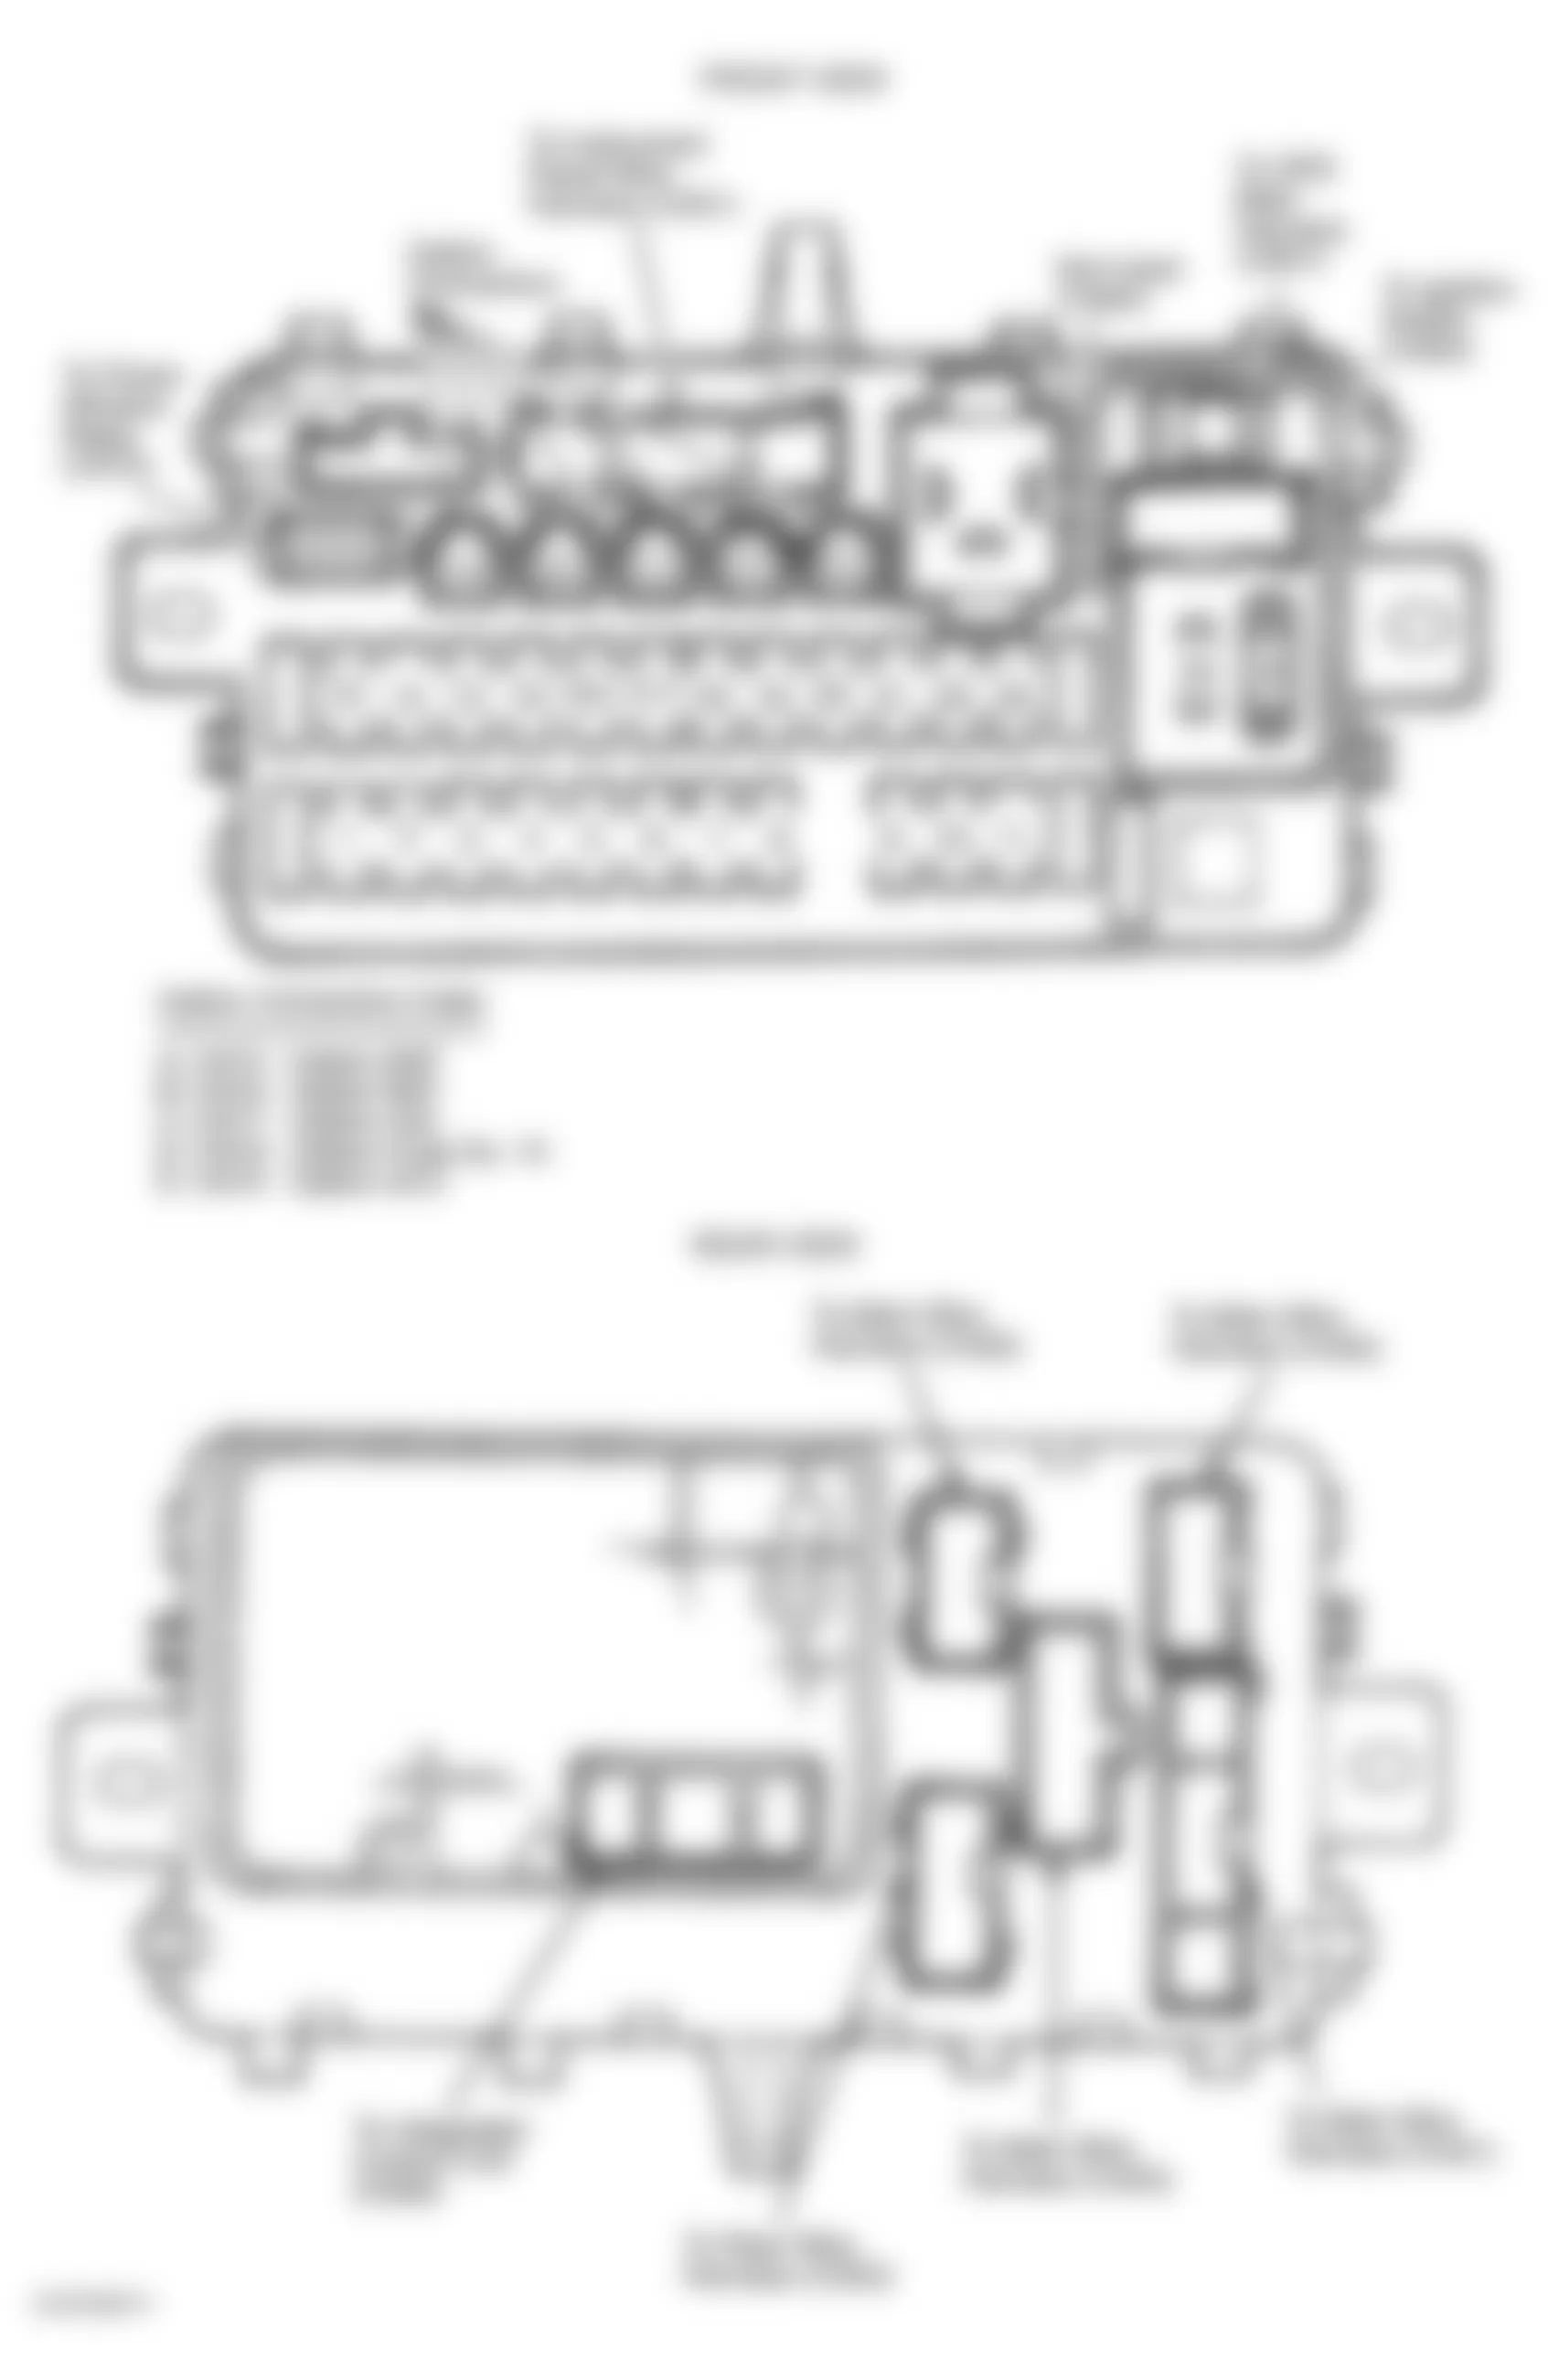 Honda Civic del Sol Si 1993 - Component Locations -  Identifying Under-Dash Fuse/Relay Box Components (1994-95 Civic Del Sol)